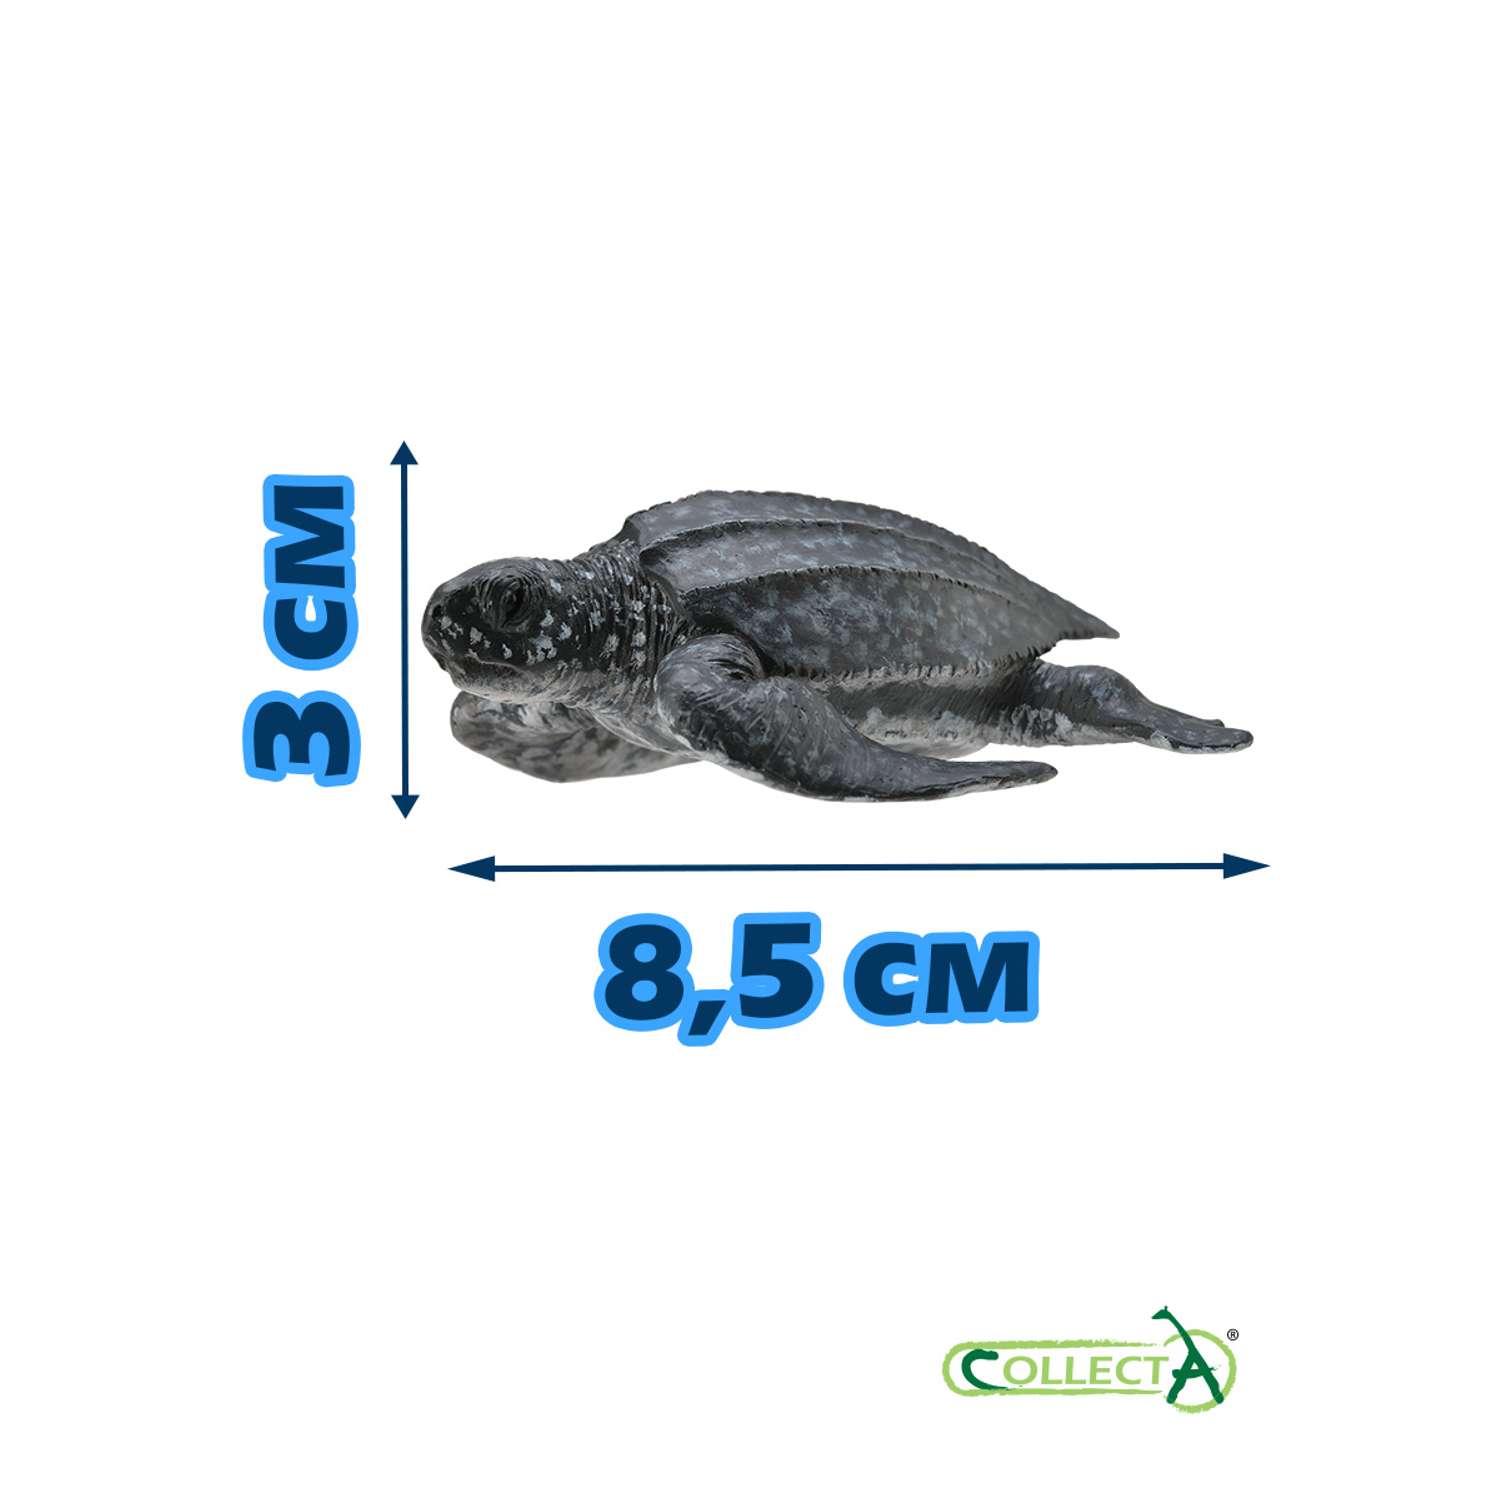 Фигурка животного Collecta Кожистая черепаха - фото 2